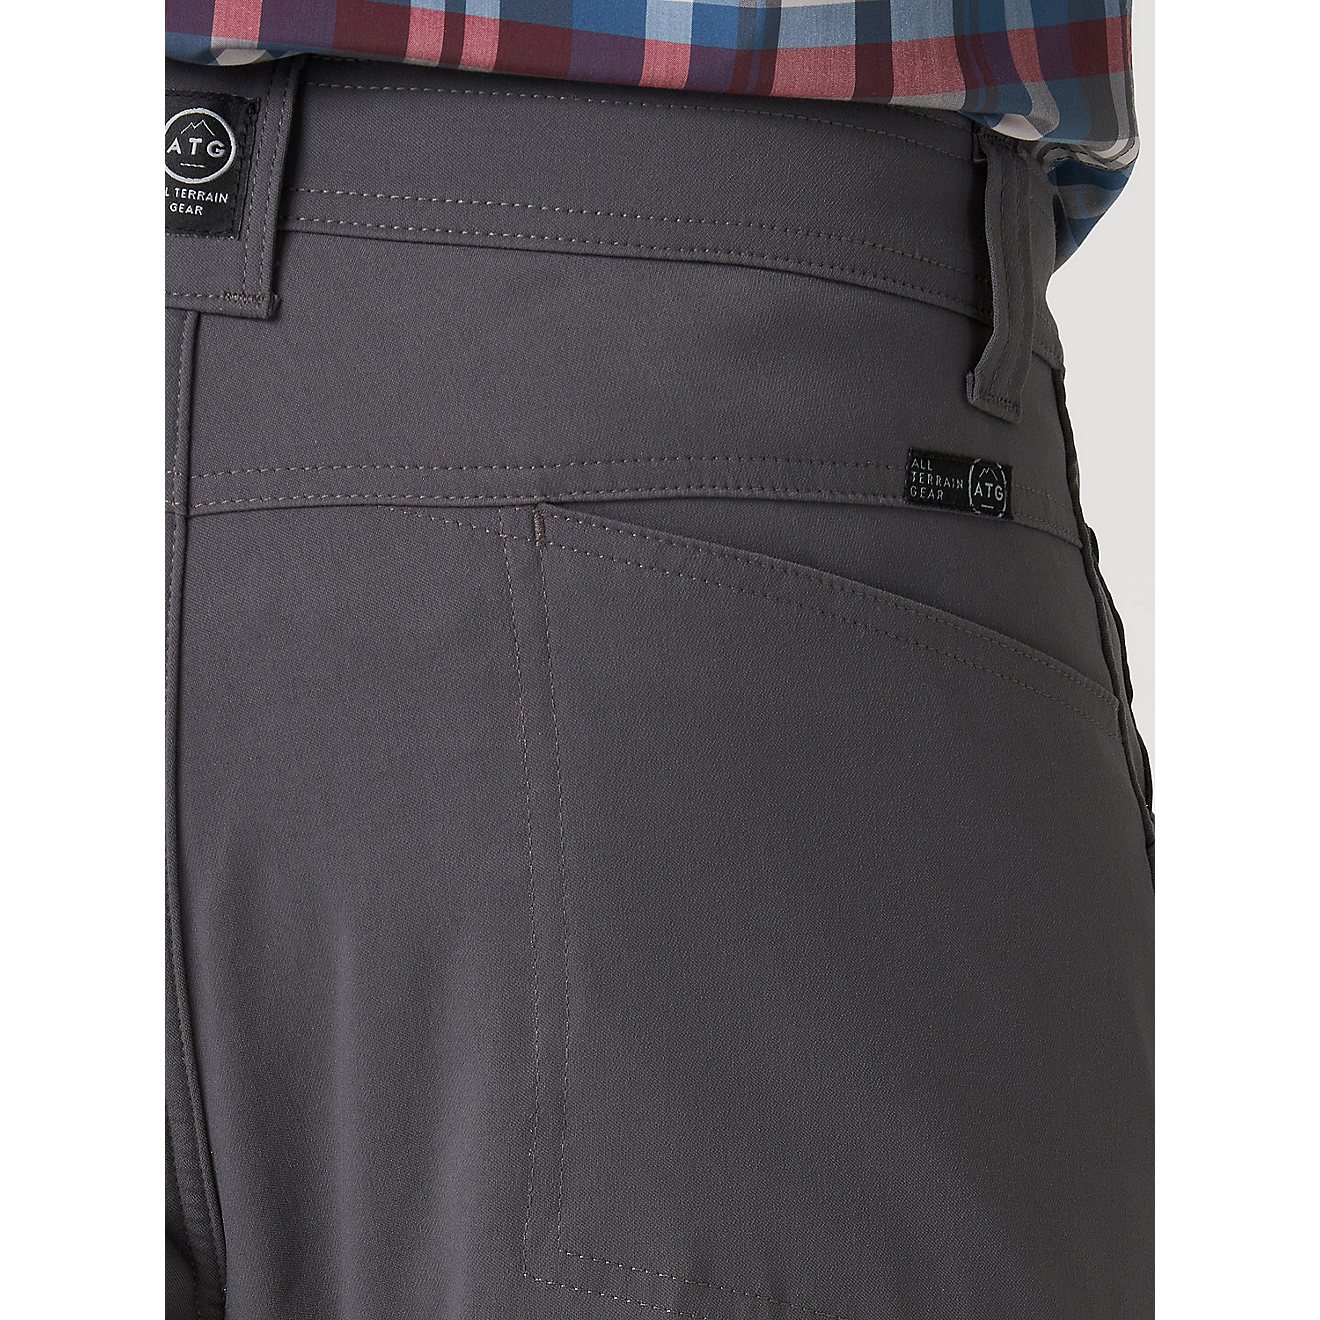 Wrangler Men's ATG Fleece Lined Utility Pants                                                                                    - view number 6